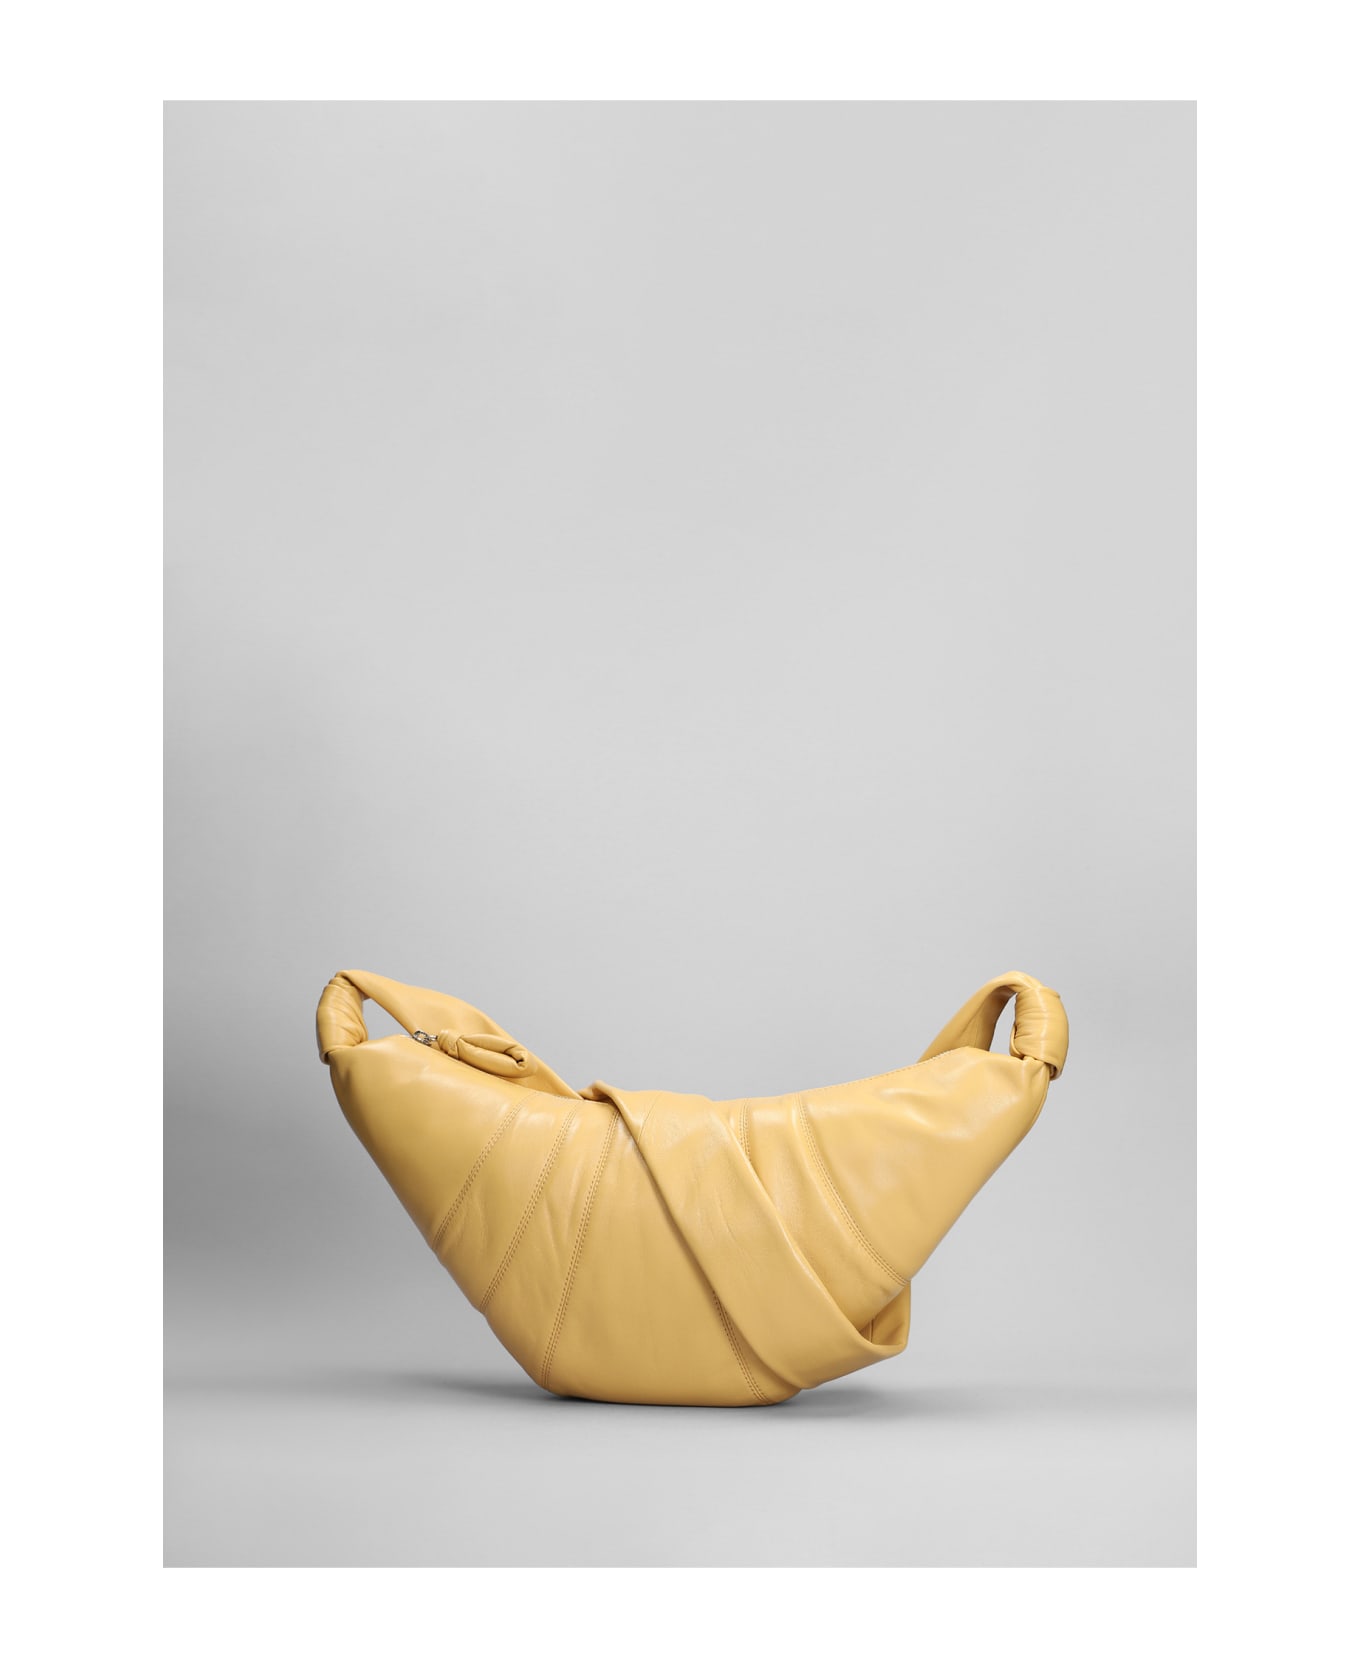 Lemaire Meduim Croissant Shoulder Bag In Yellow Leather - Ocher